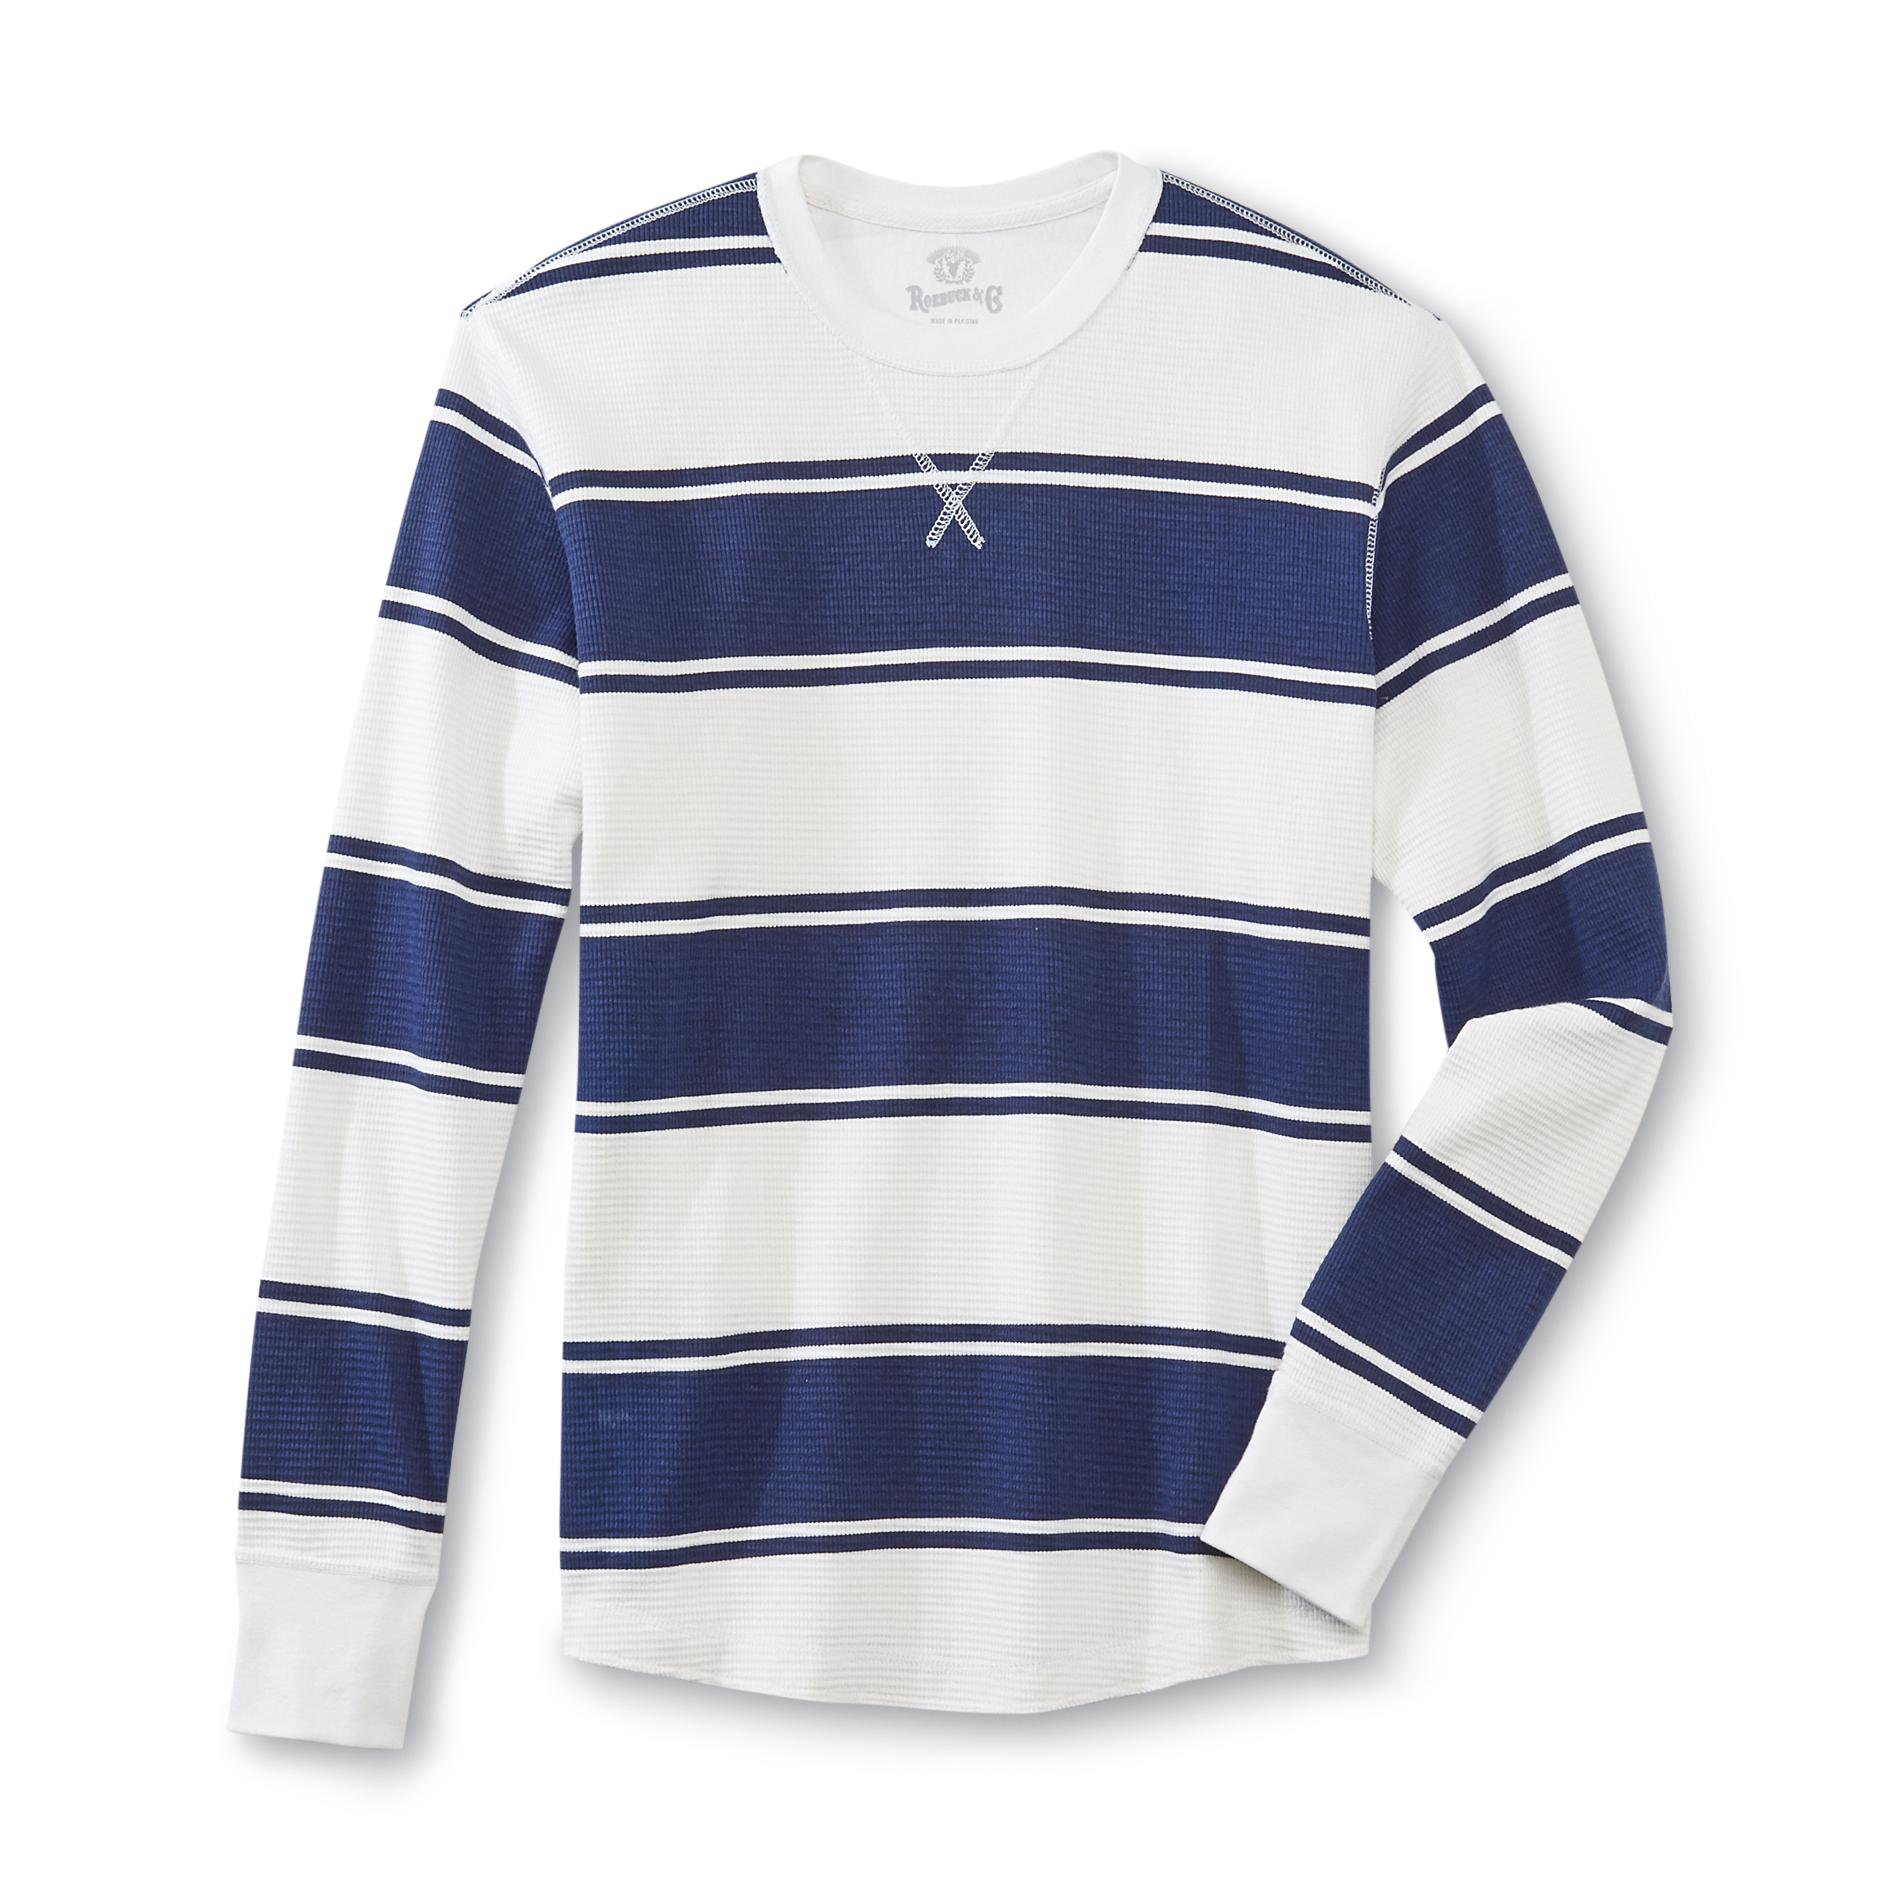 Roebuck & Co. Young Men's Thermal Shirt - Striped